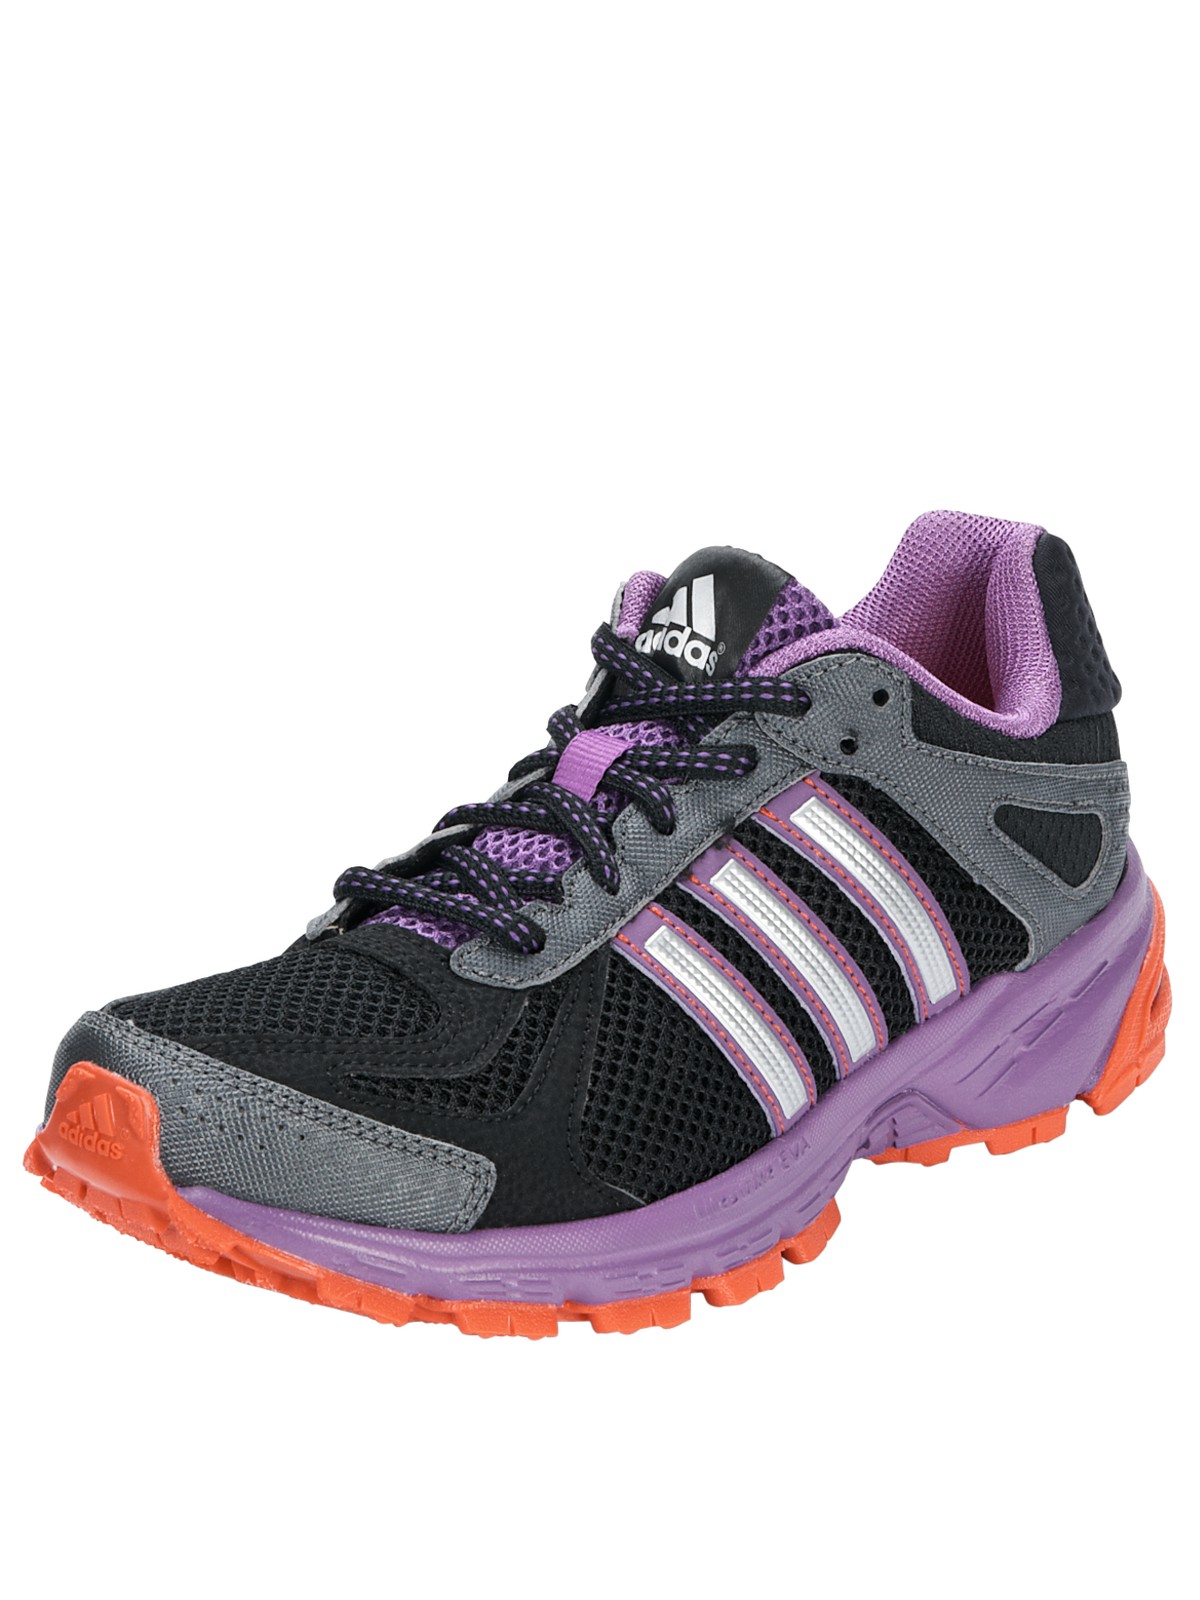 Adidas Duramo 5 Tr Trainers in Purple (black/silver/purple) | Lyst